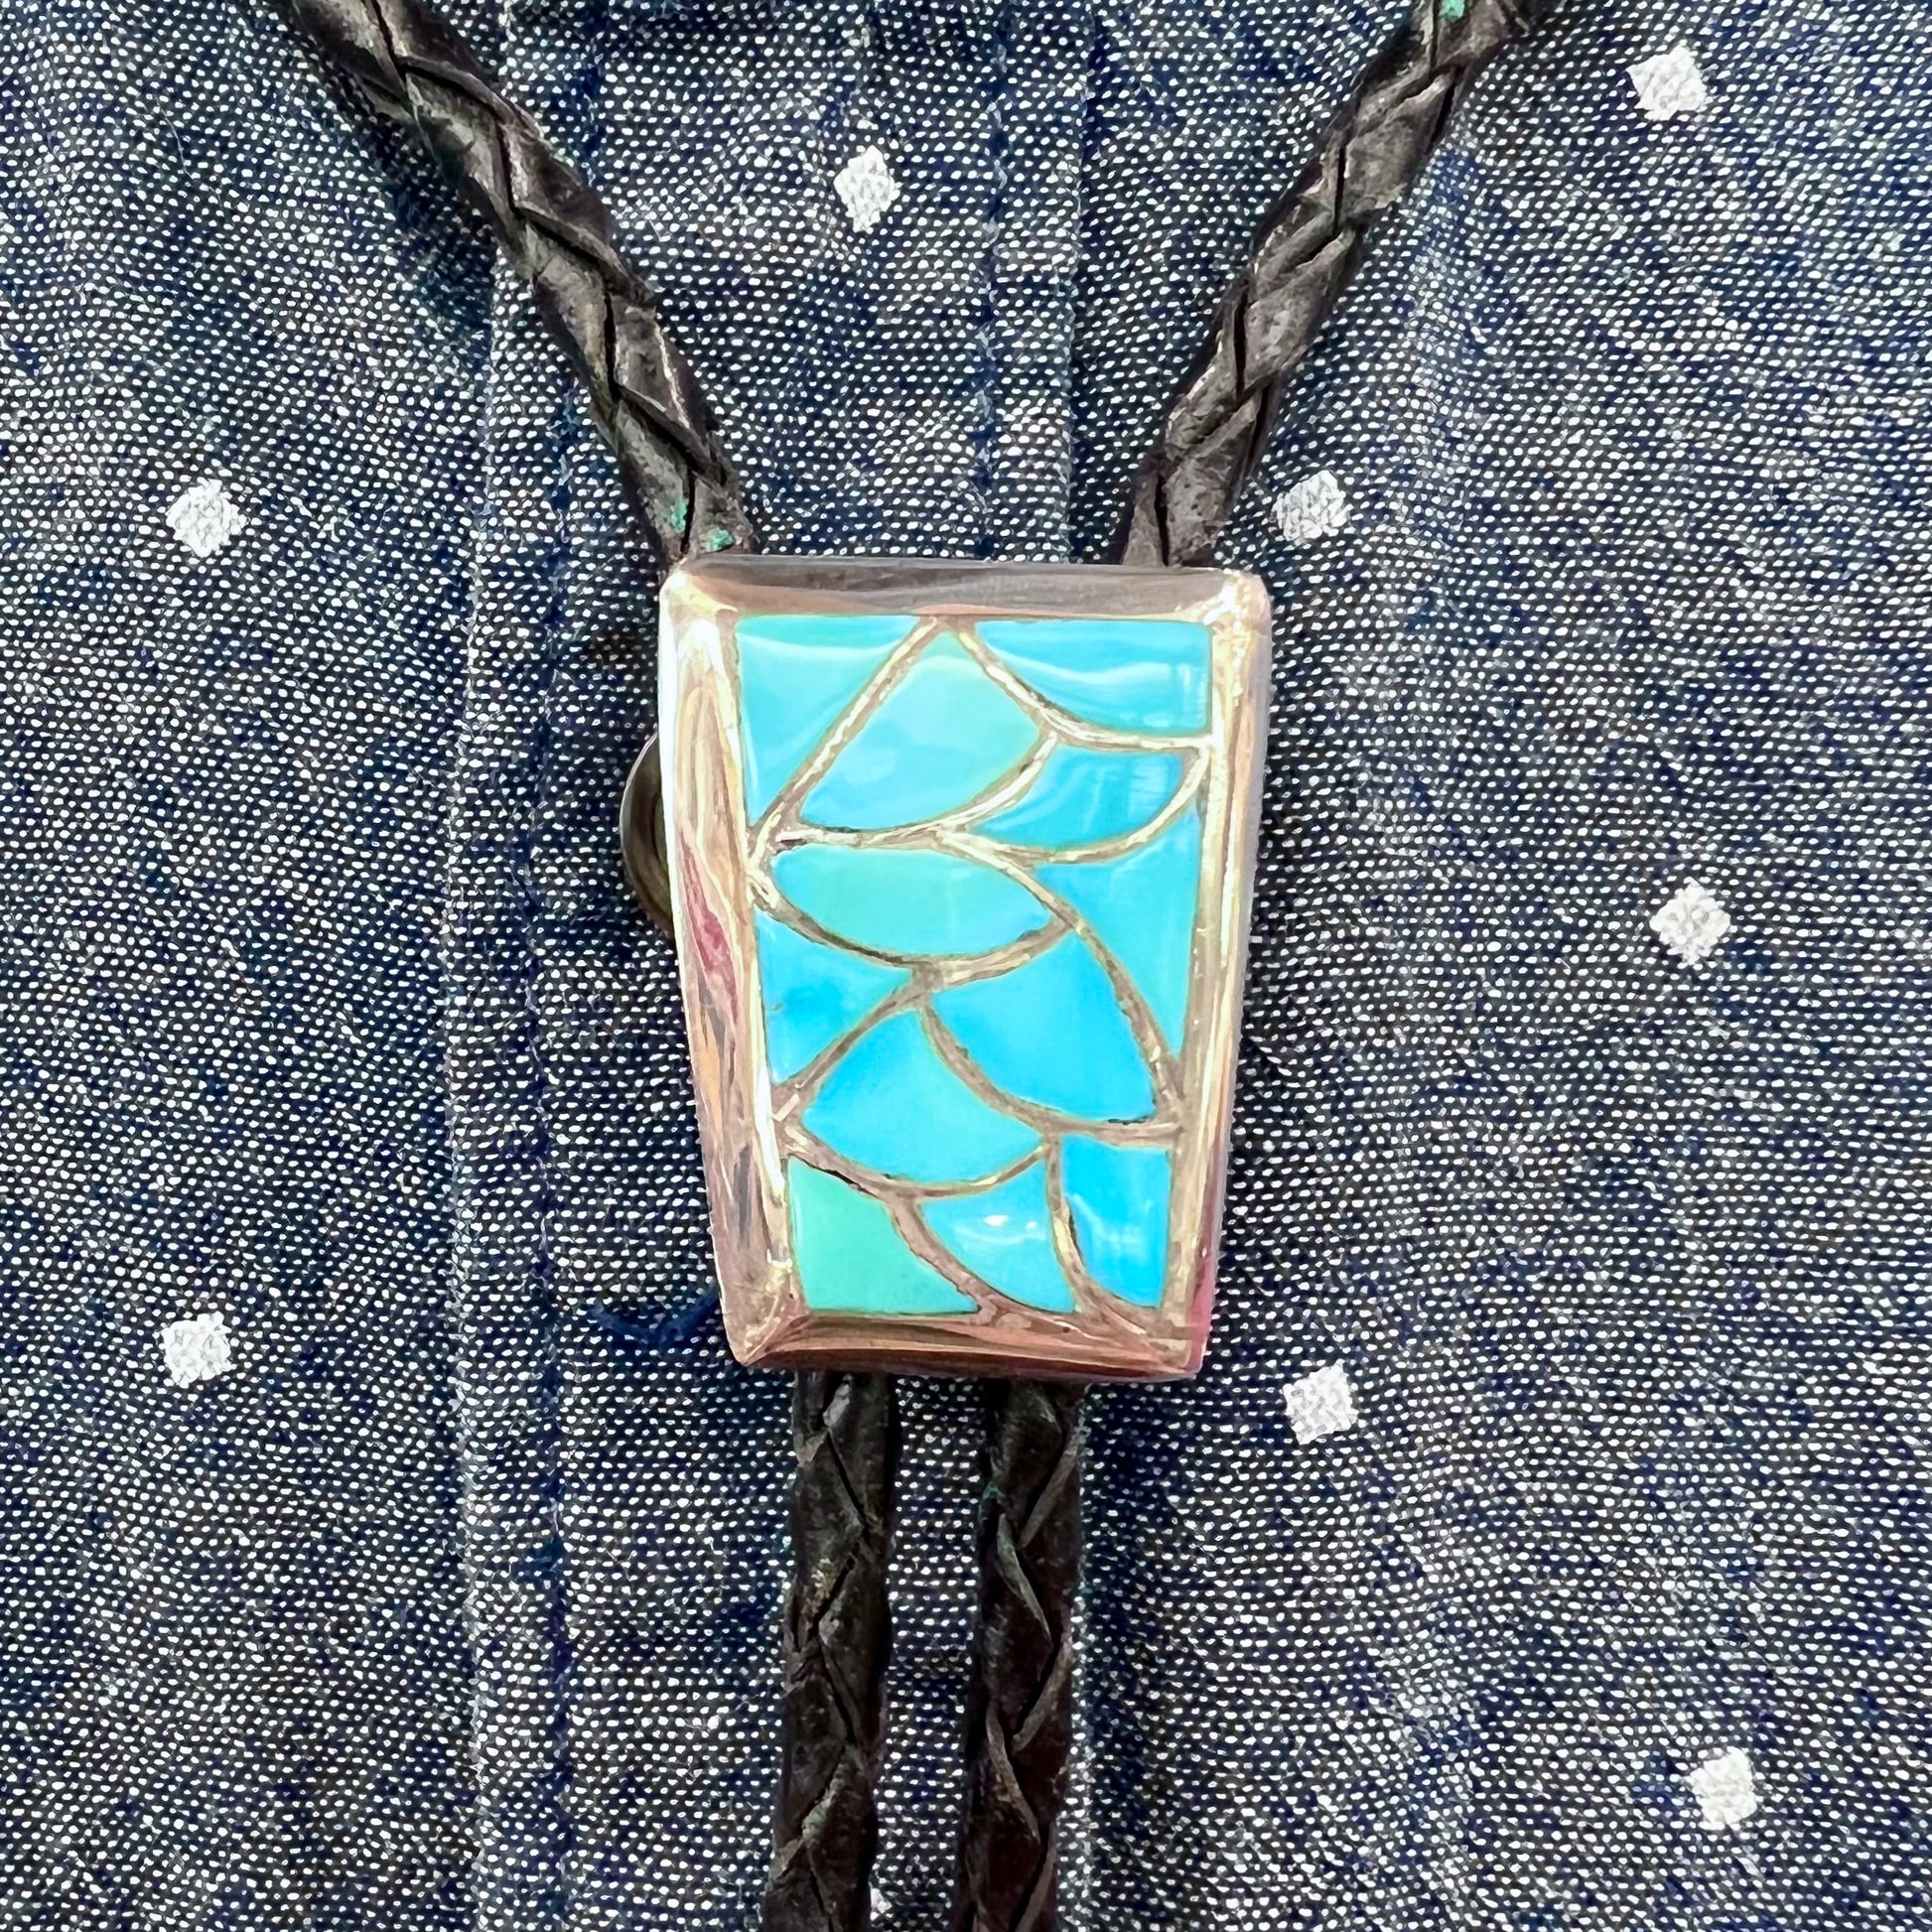 A silver turquoise inlay bolo tie handmade by Navajo artist, Lillian Fernando.